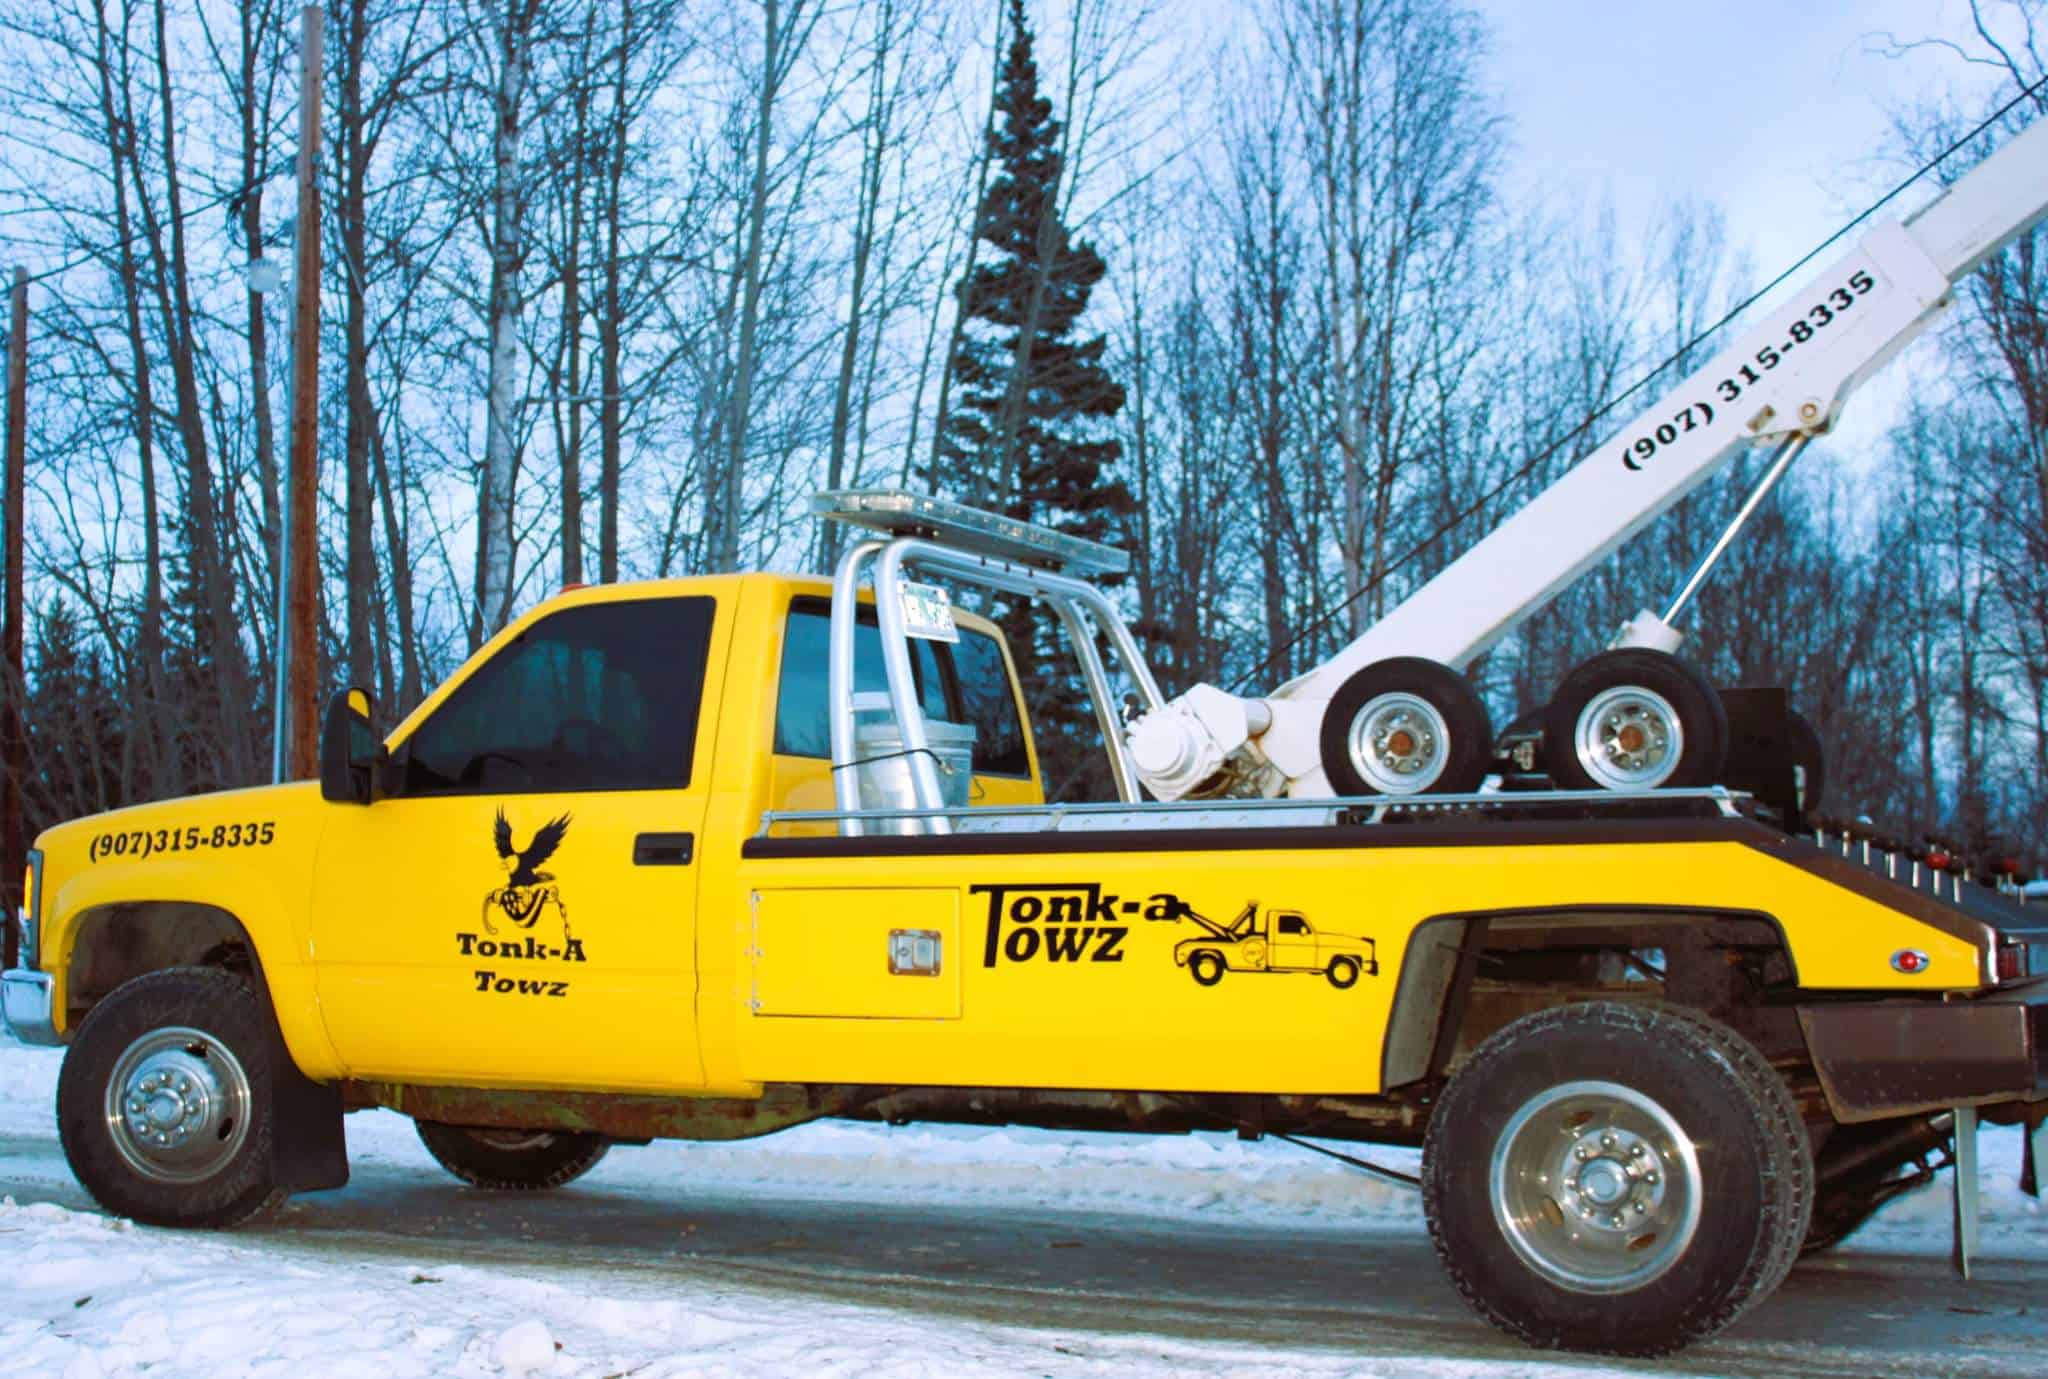 side view of yellow tonka towz truck.